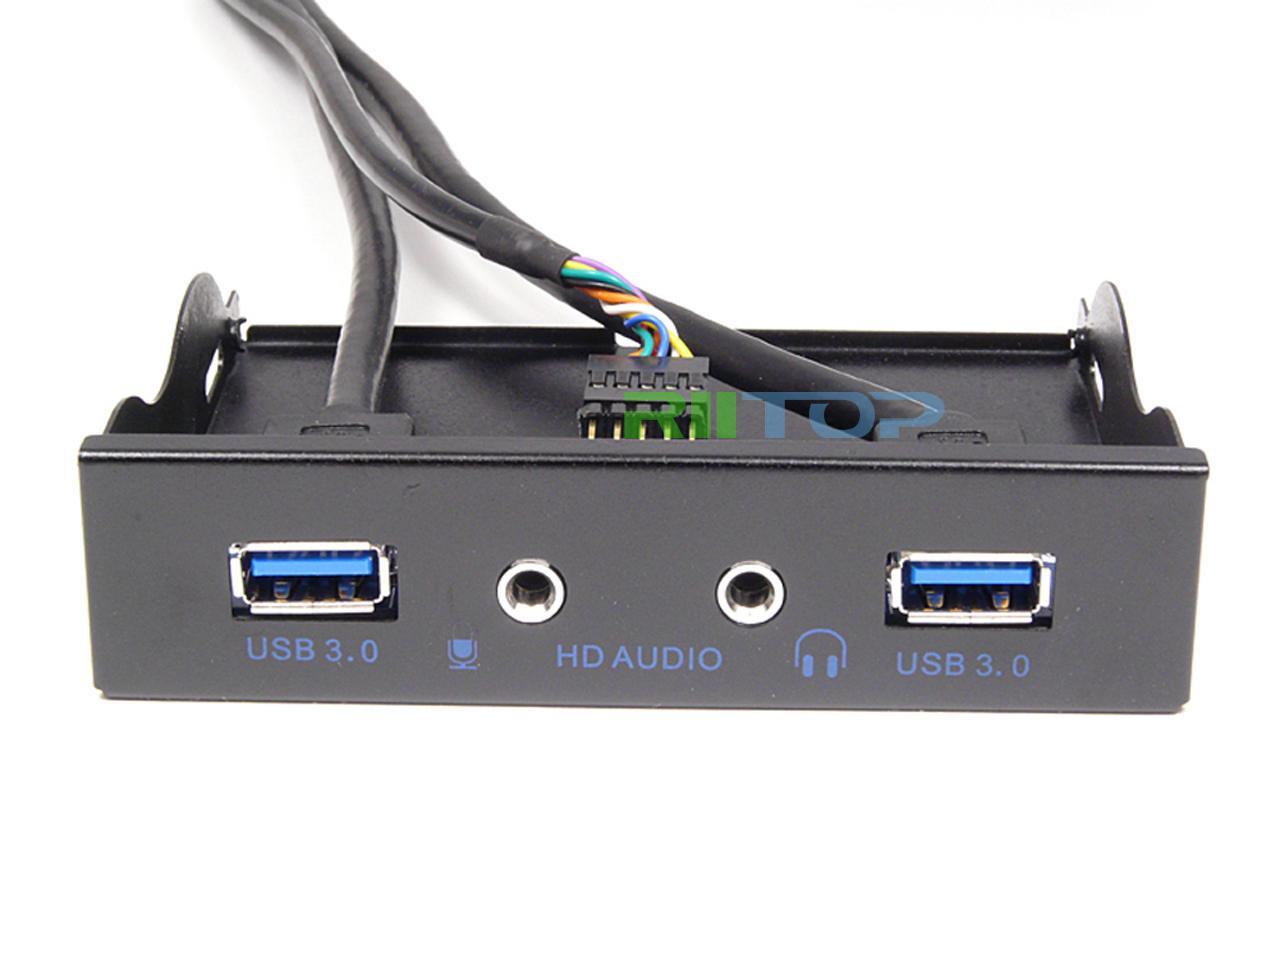 Передние usb купить. USB концентратор PCI-E 5 USB. Разъем передней панели ПК USB 3.0. Выносная планка USB 3.2. USB 3.0 2.0 концентратор.